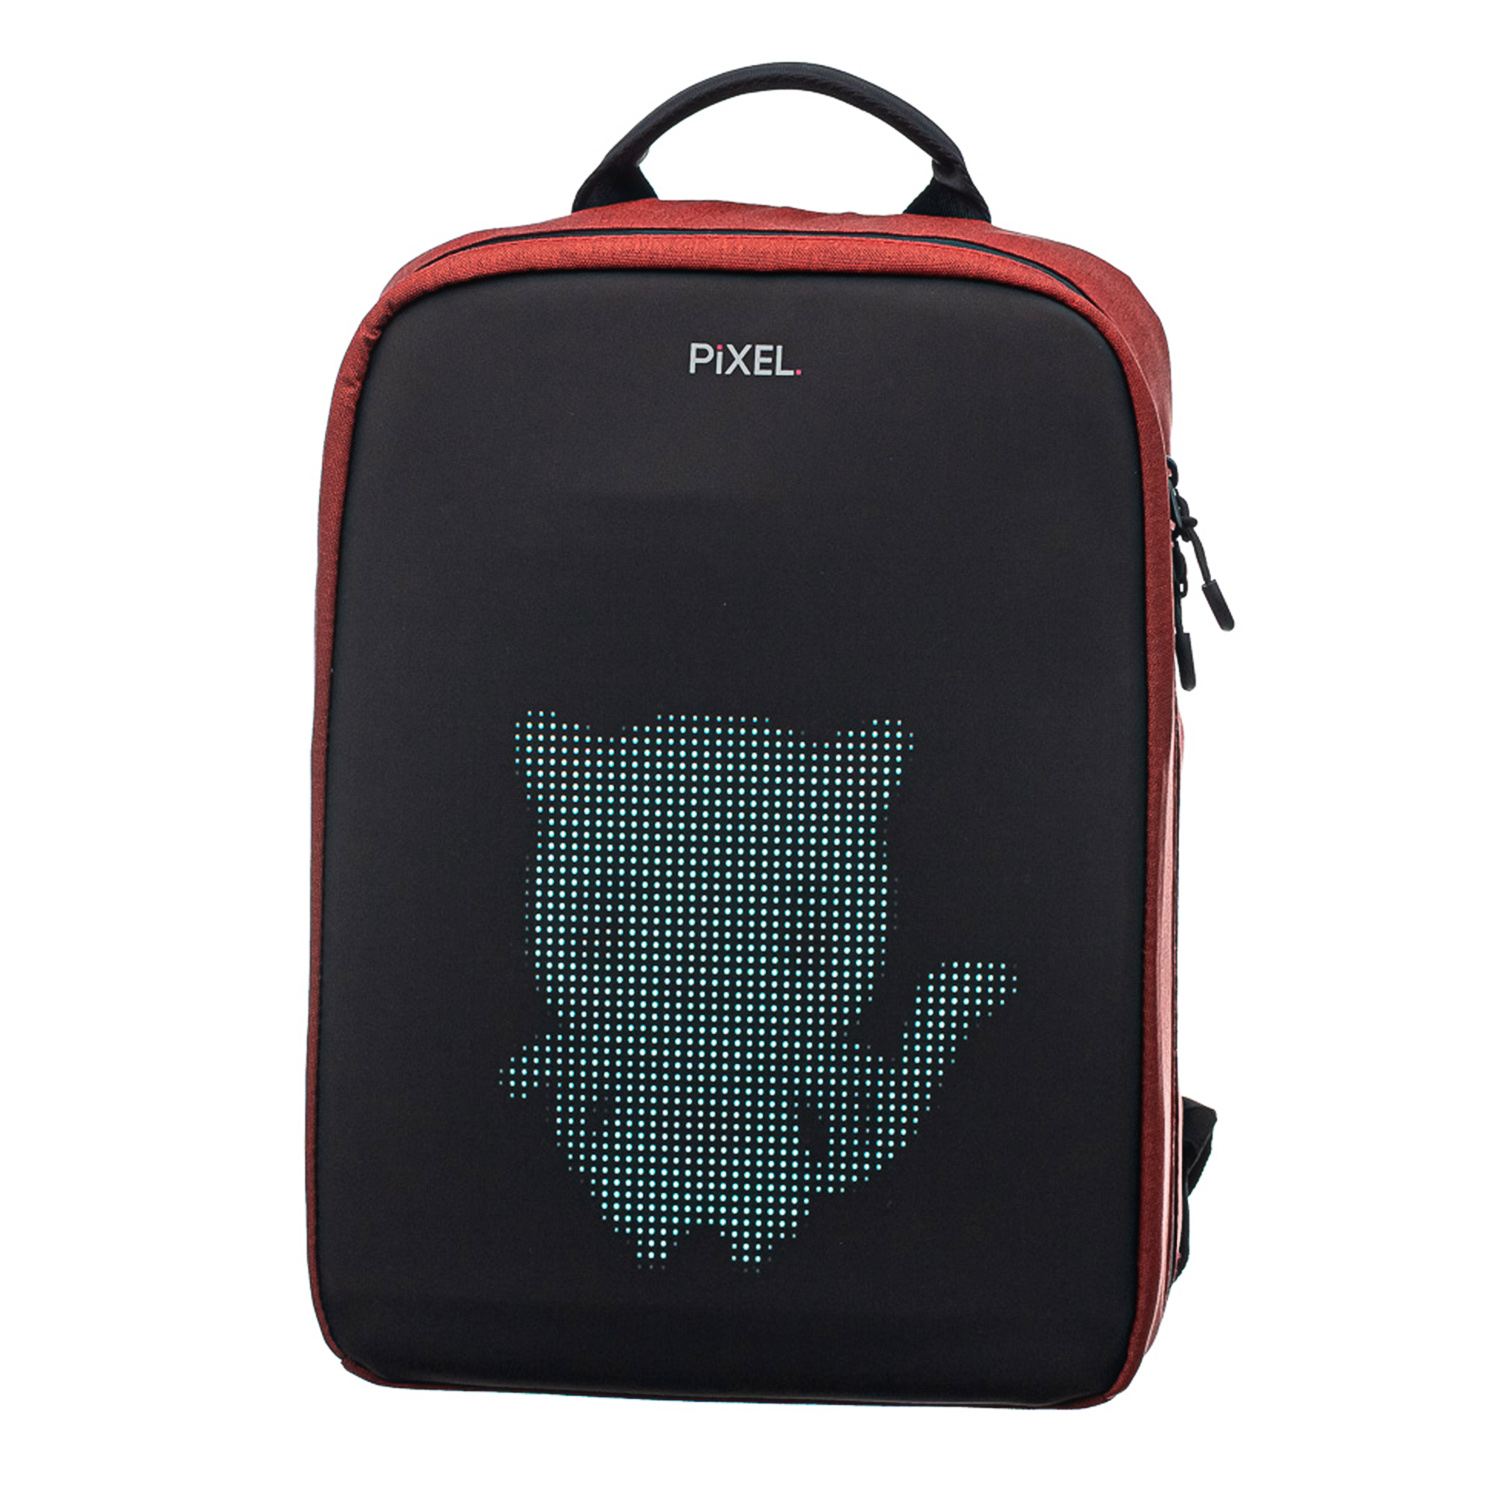 Рюкзак с LED-дисплеем PIXEL PLUS - RED LINE (бордовый) Pixel Bag детский, цвет нет цвета Рюкзак с LED-дисплеем PIXEL PLUS - RED LINE (бордовый) Pixel Bag детский - фото 1